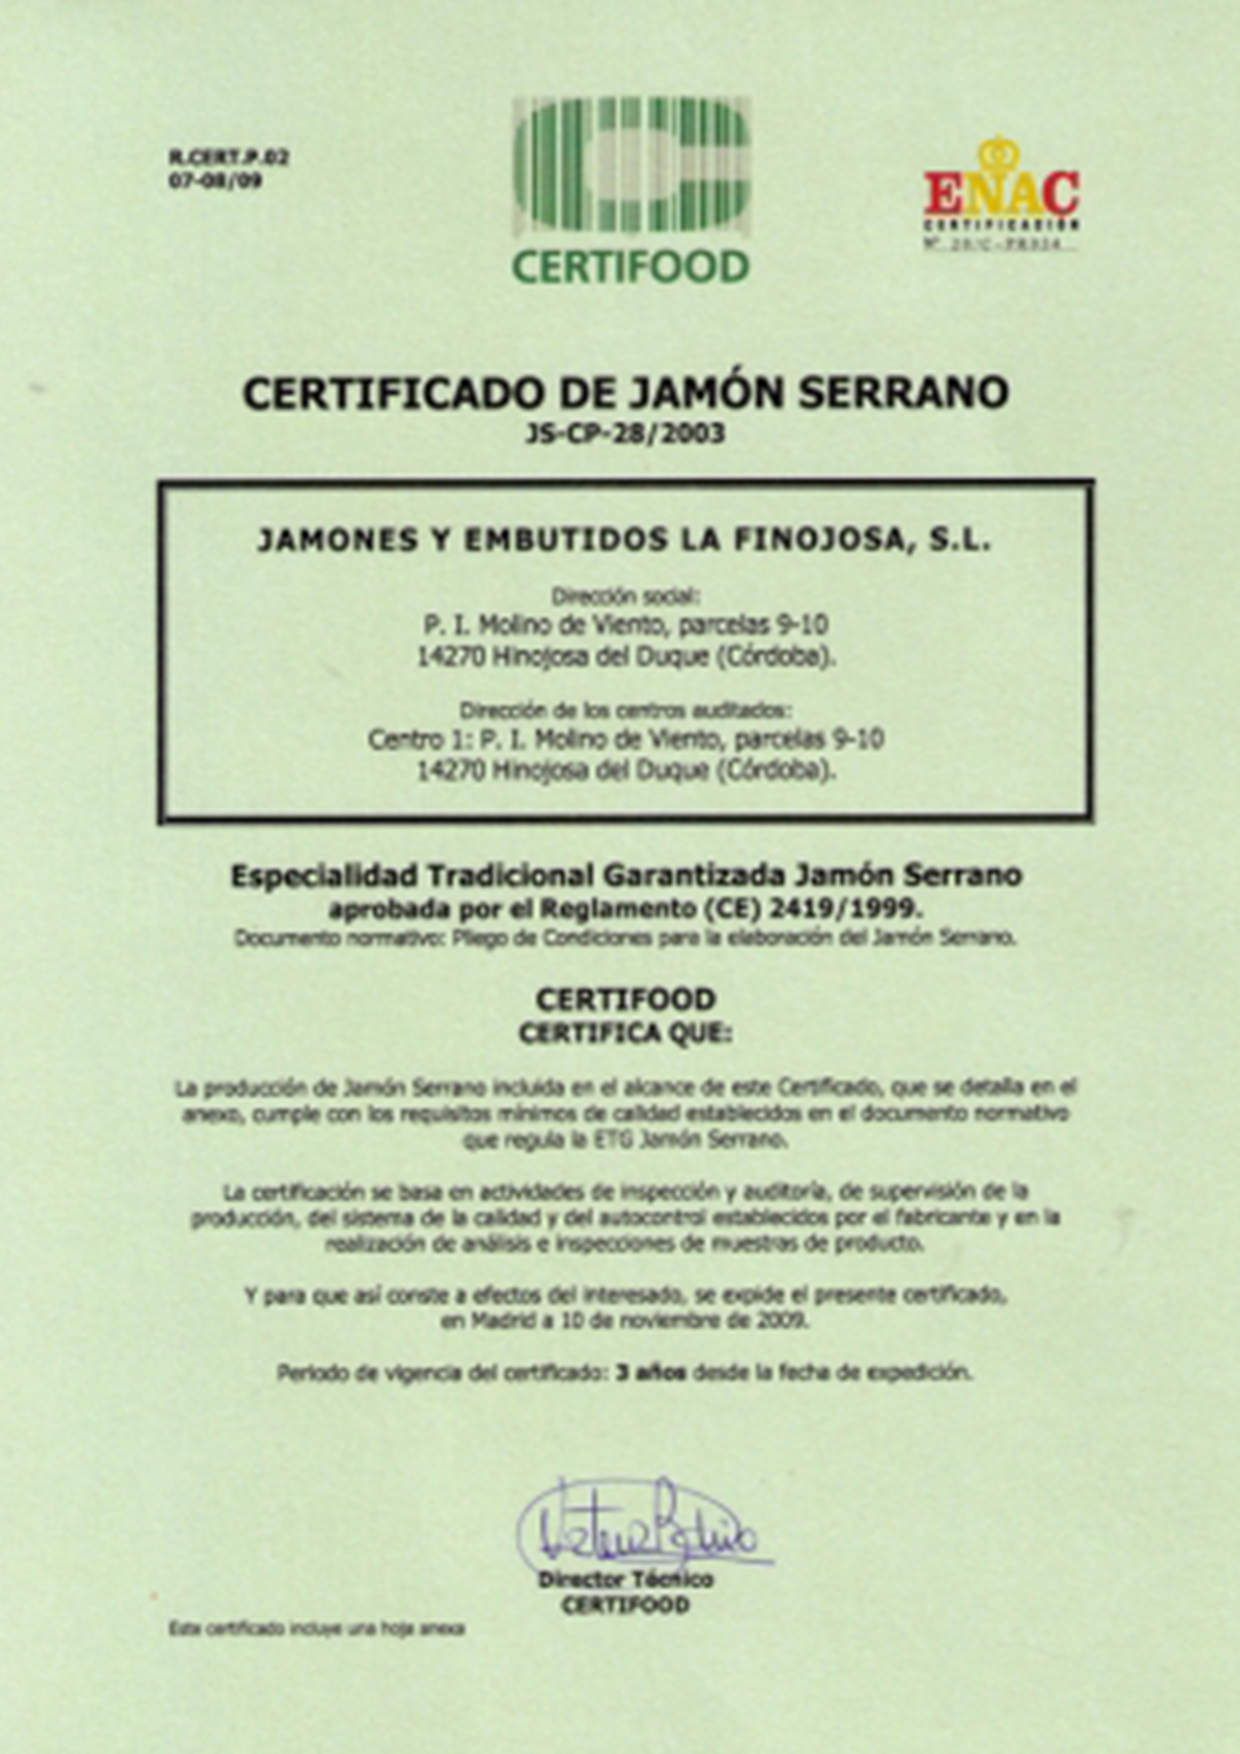 ETG Jamón Serrano